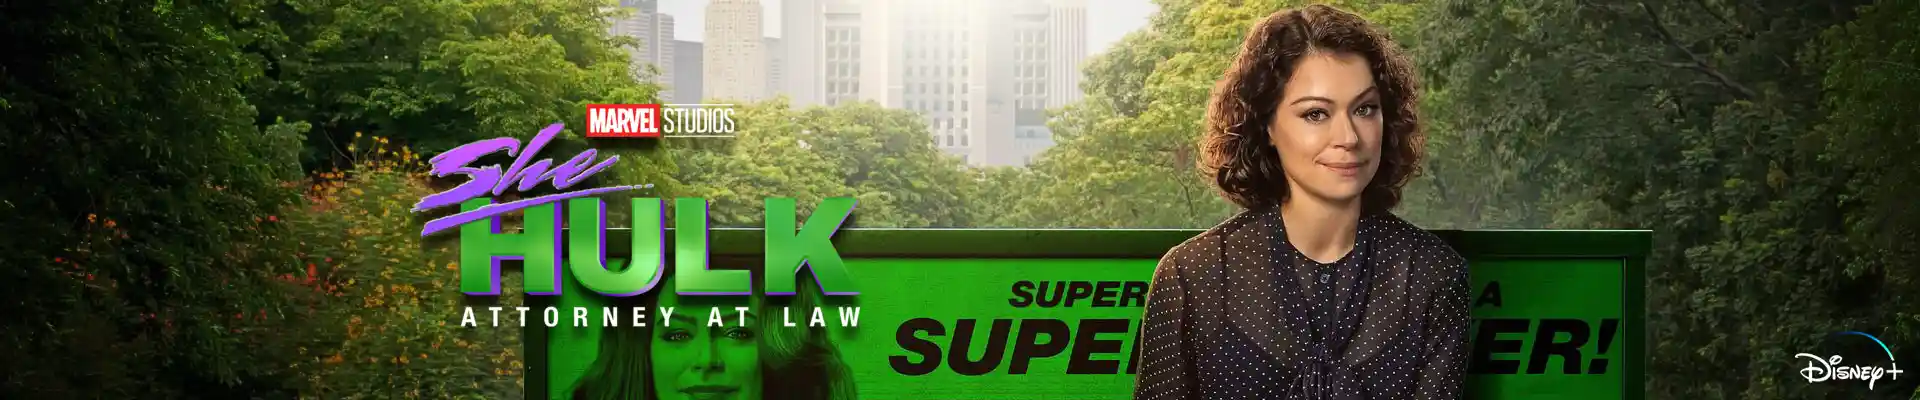 She Hulk: Attorney at Law (2022) ชี ฮัลค์ ทนายสายลุย